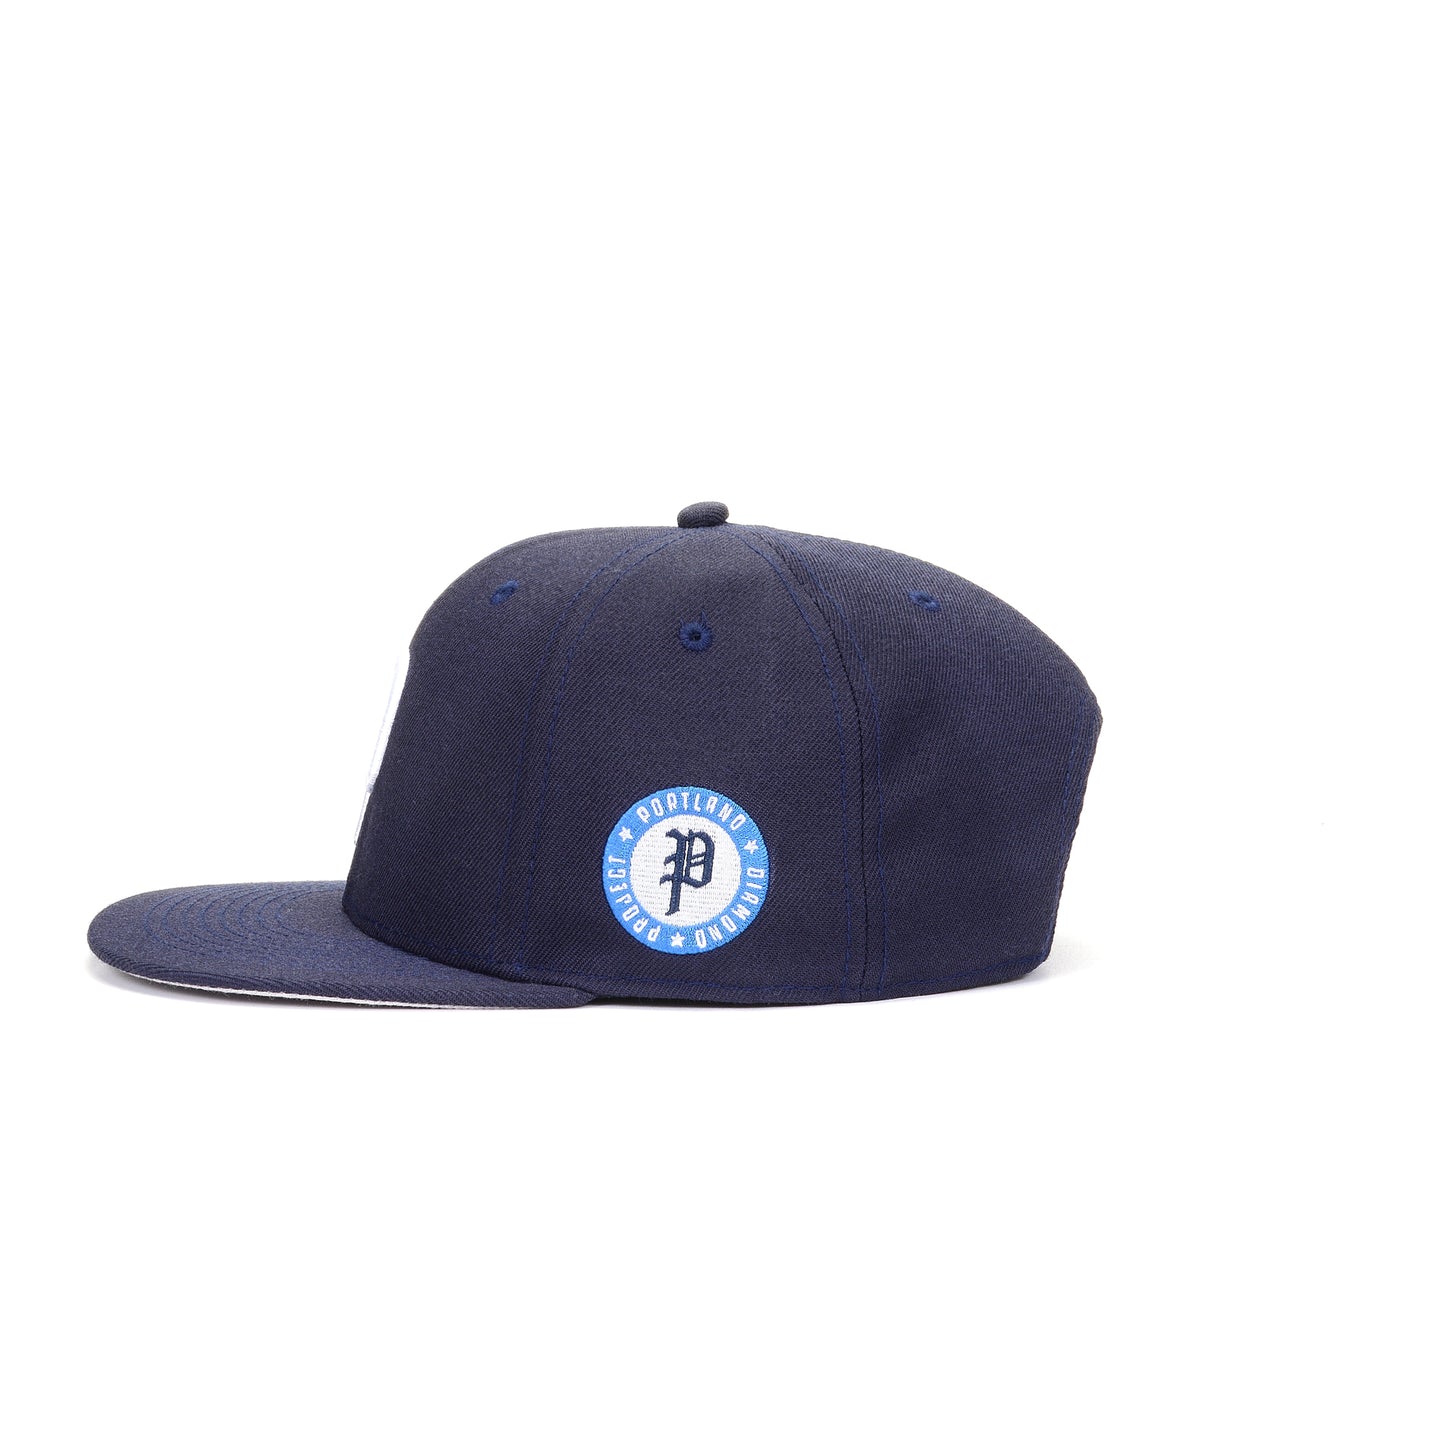 Baseball hat 360 photography | Interactive eCommerce photography of fashion productBaseball hat 360 photography | Interactive eCommerce photography of fashion product